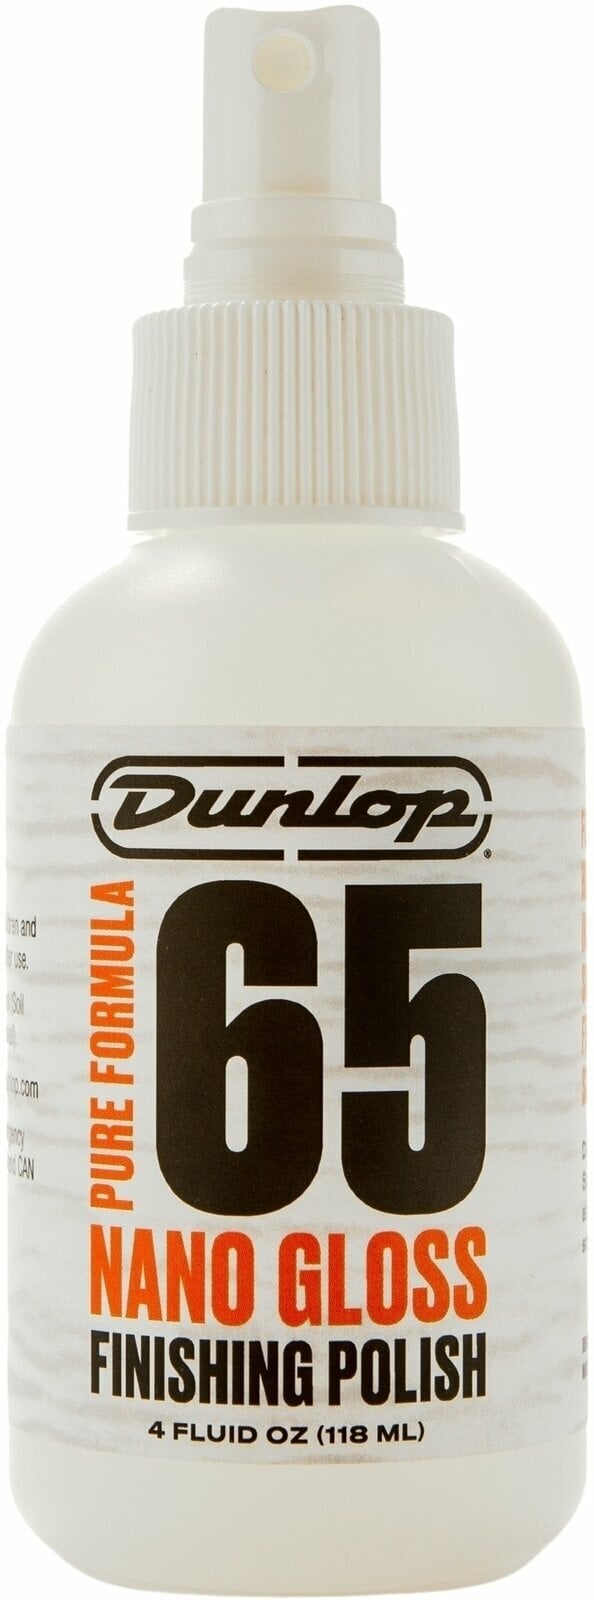 Dunlop Pure Formula 65 Nano Gloss Dunlop